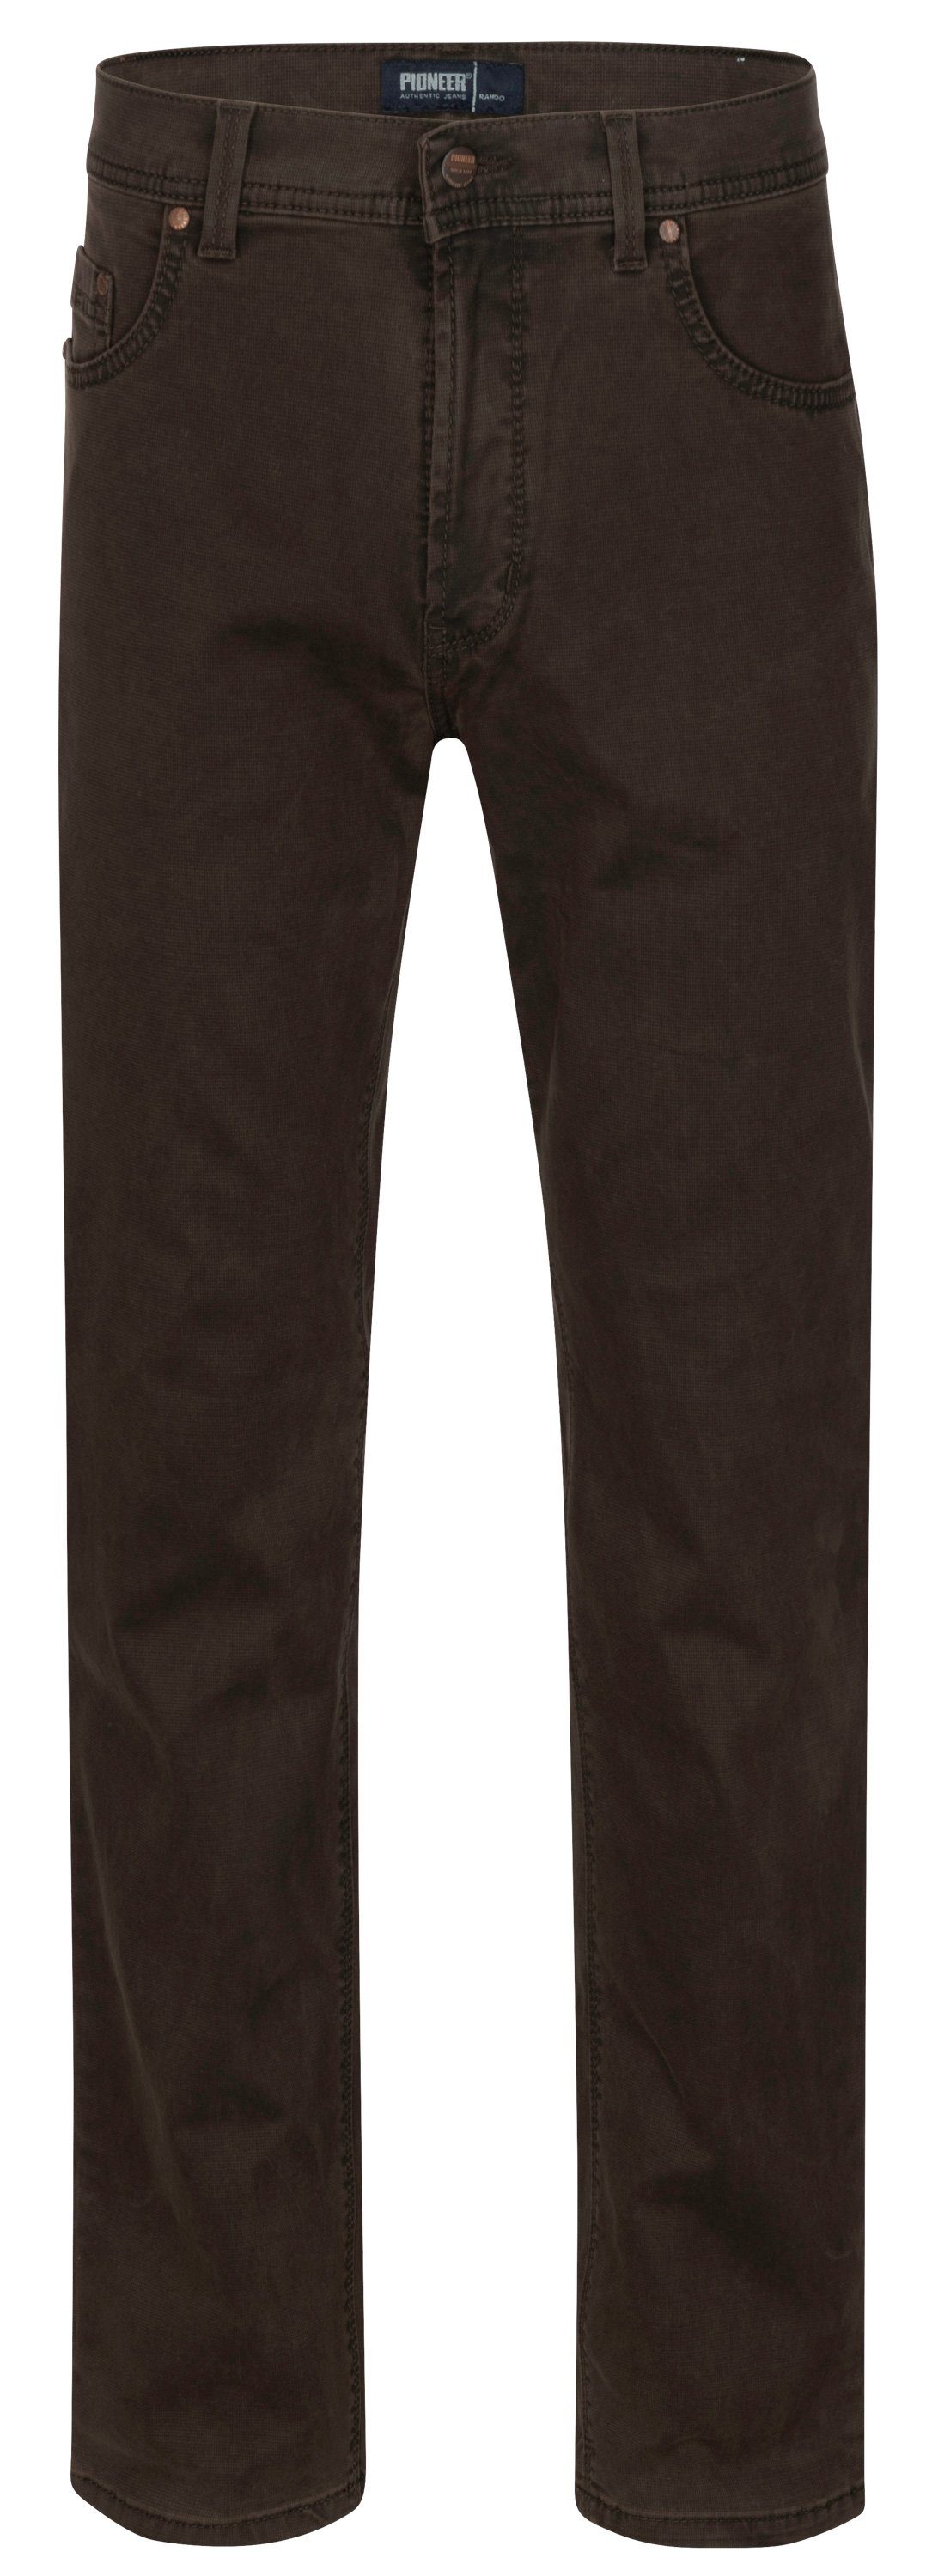 MEGAFLEX Authentic Pioneer chestnut 5-Pocket-Jeans 16801 3762.8209 - RANDO Jeans PIONEER